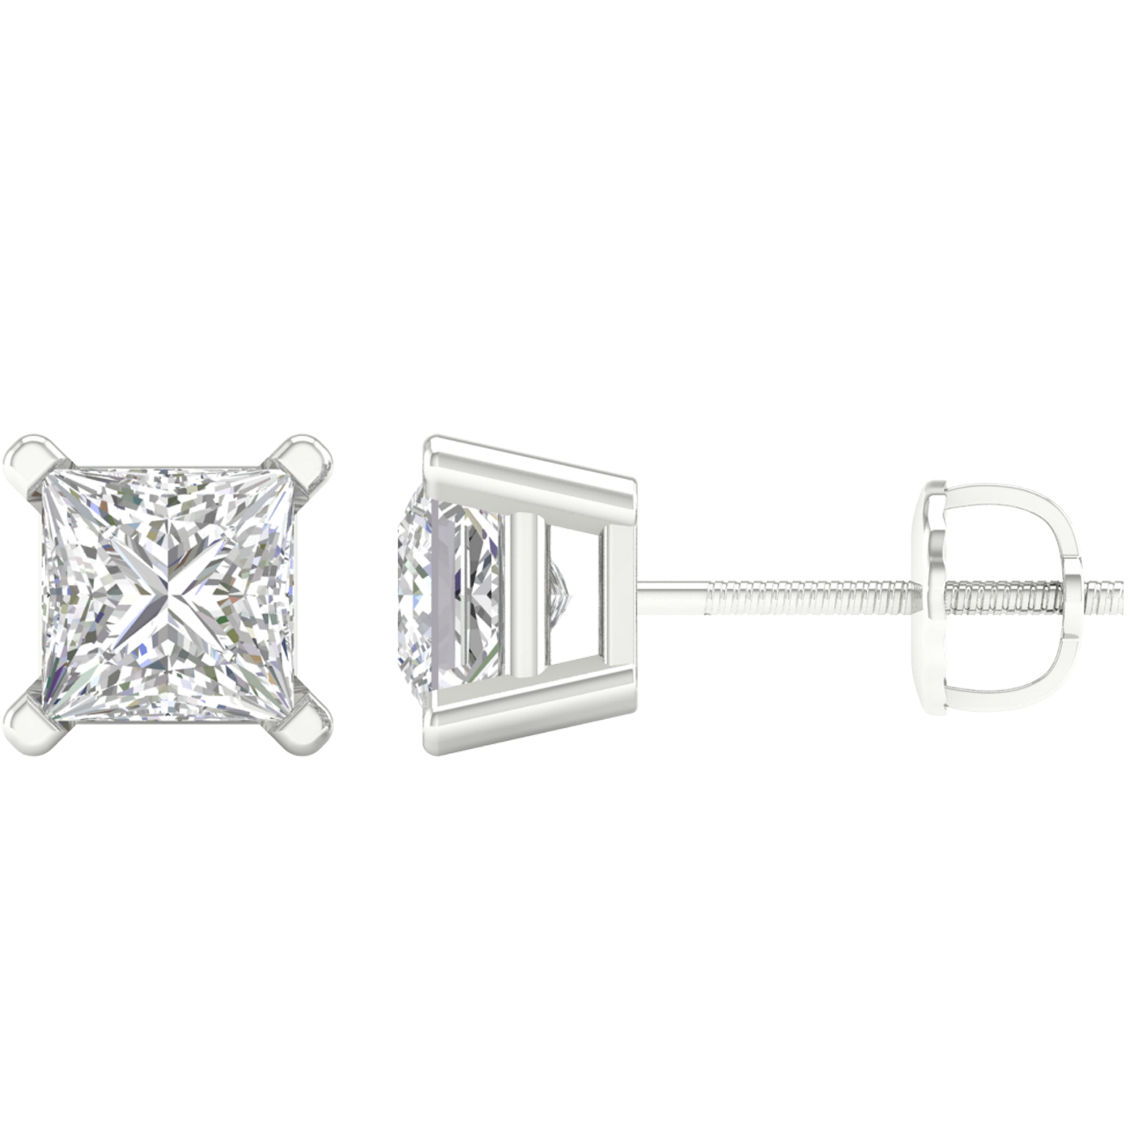 Pure Brilliance 14K White Gold 2 CTW Diamond Stud Earring - Image 1 of 2